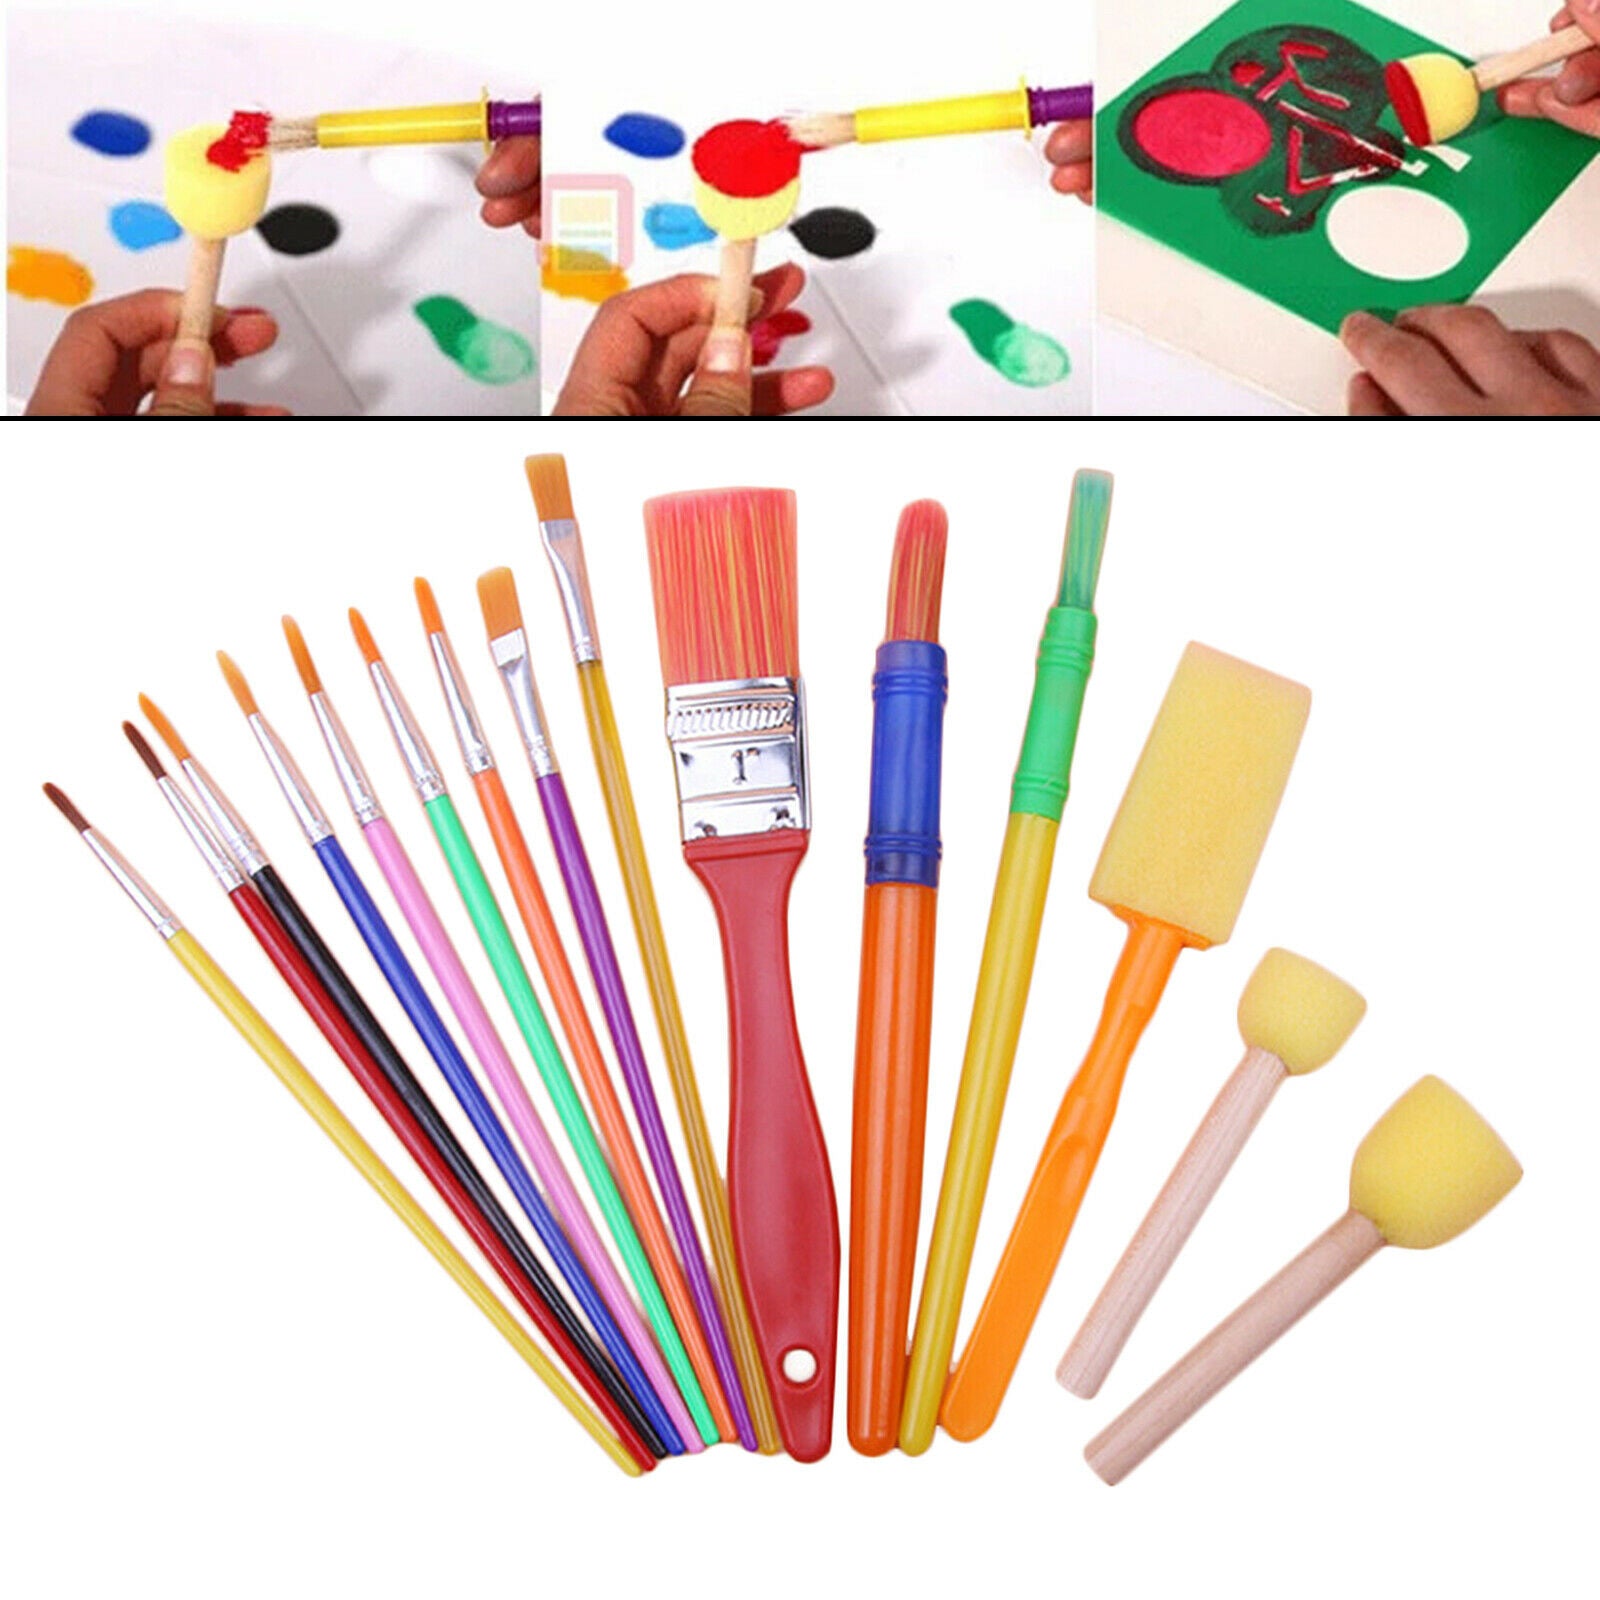 15pcs Paint Brushes Paintings Drawing Watercolor Tool Kid's Art Supplies